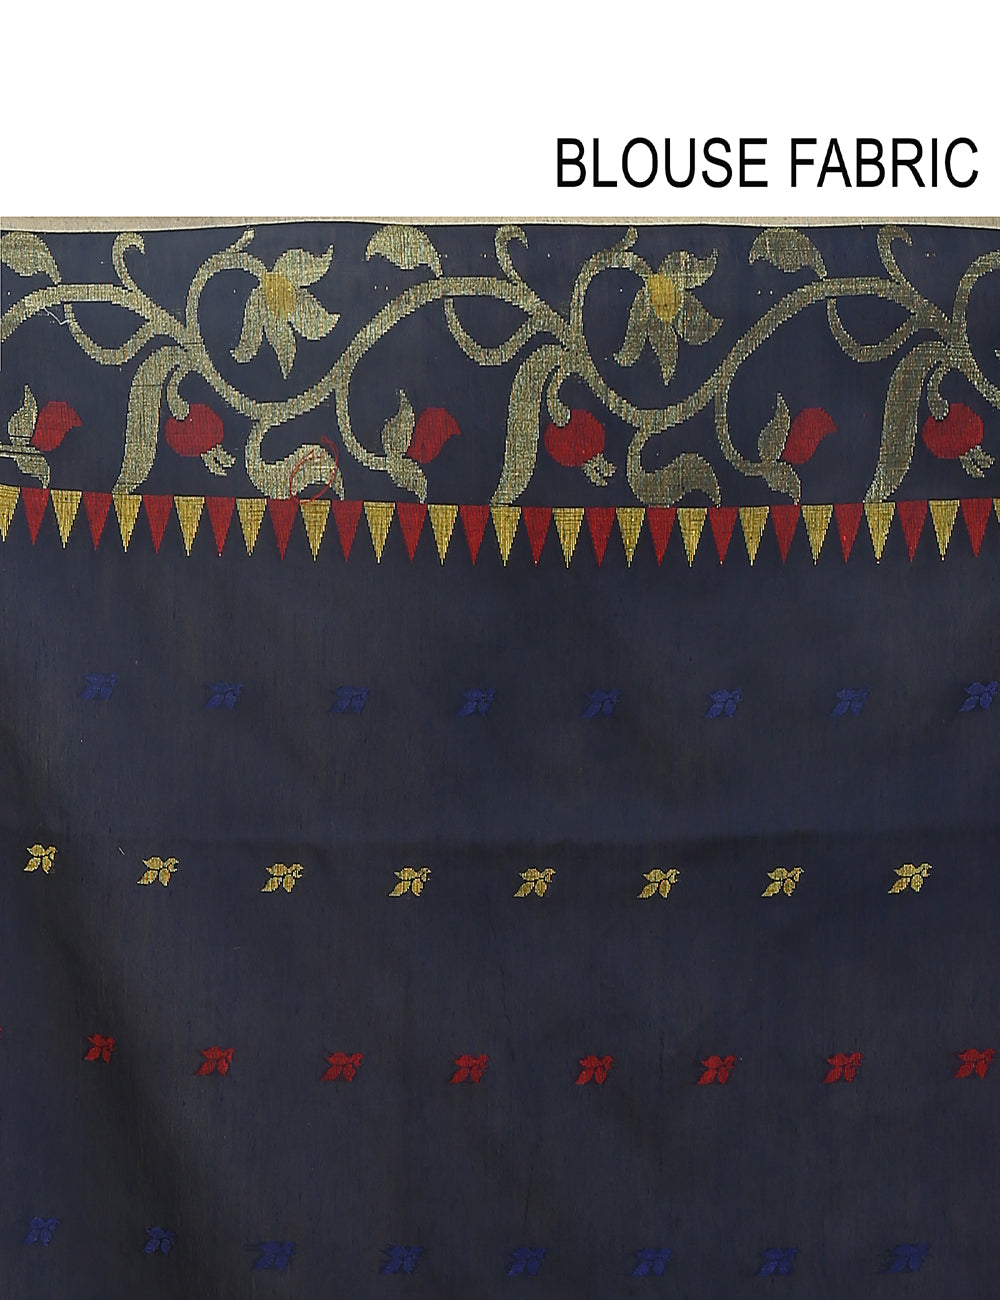 Red handloom art silk and cotton bengal saree